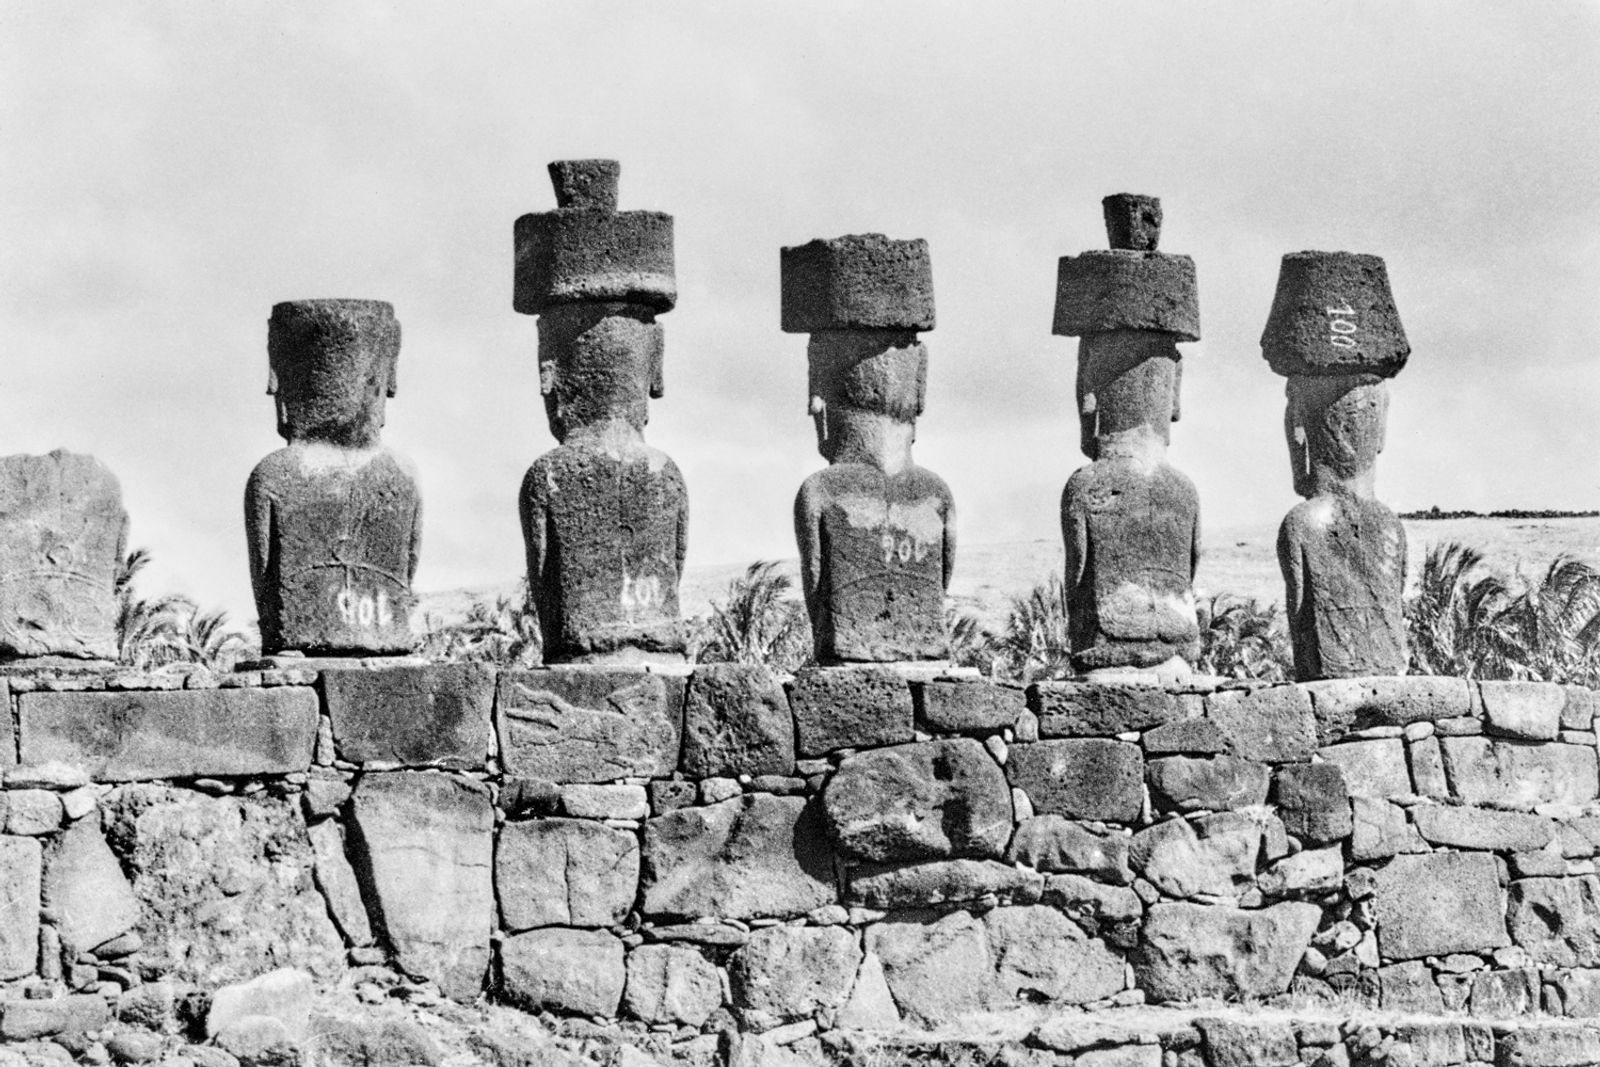 © Camille Mazier - Archive, Moai, Easter Island, 1979